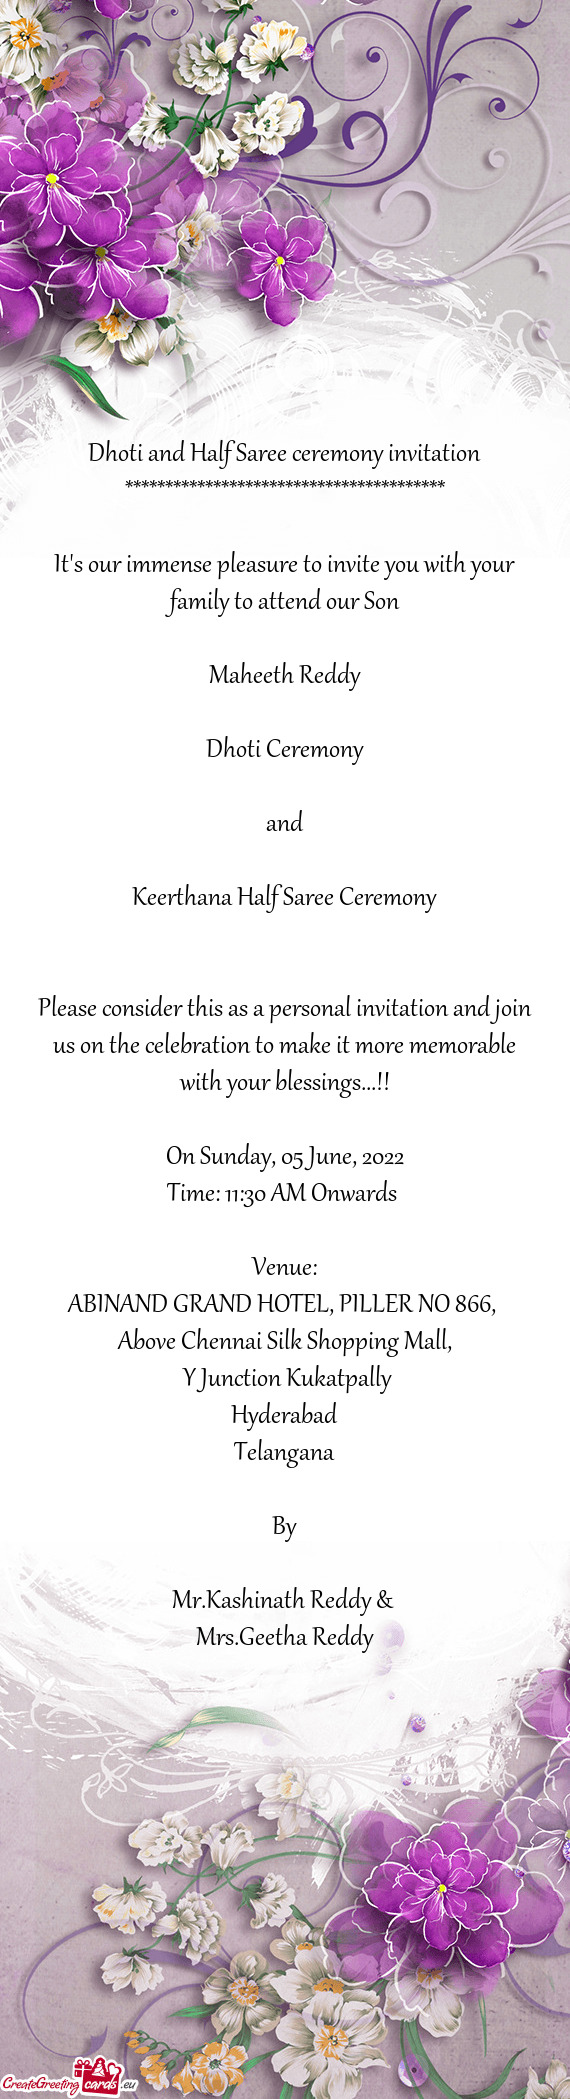 Keerthana Half Saree Ceremony